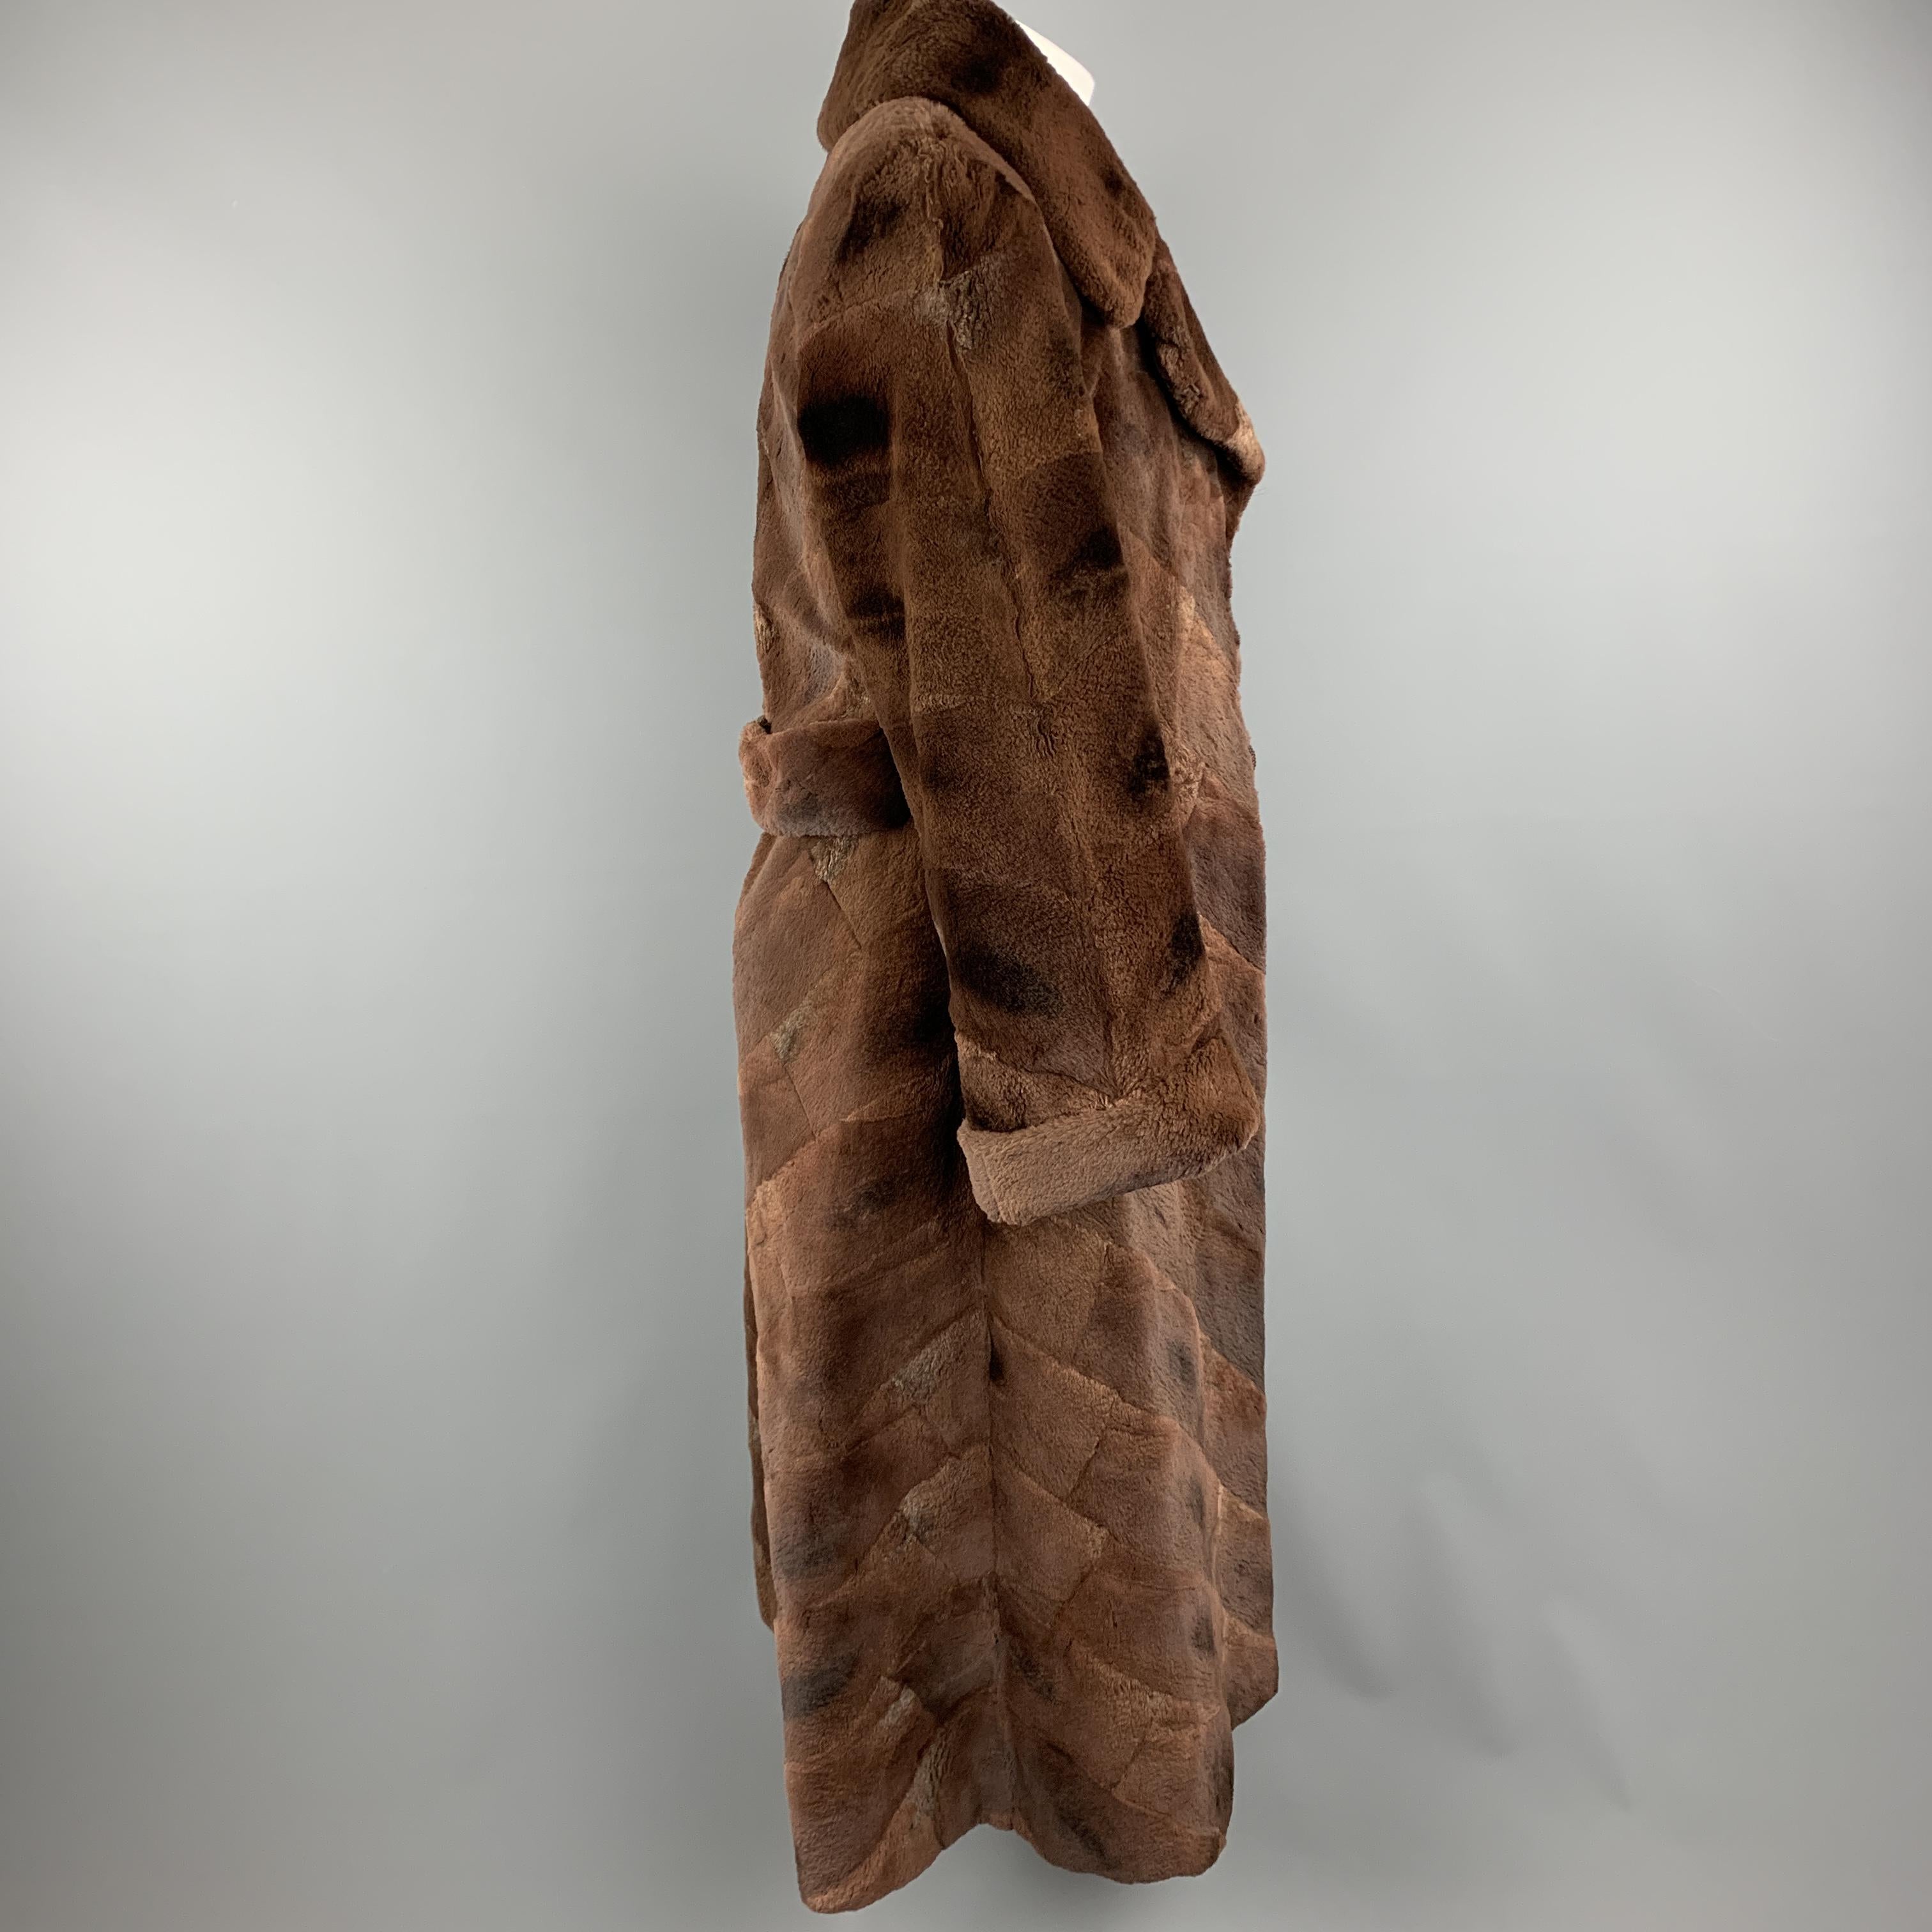 muskrat fur coat vintage